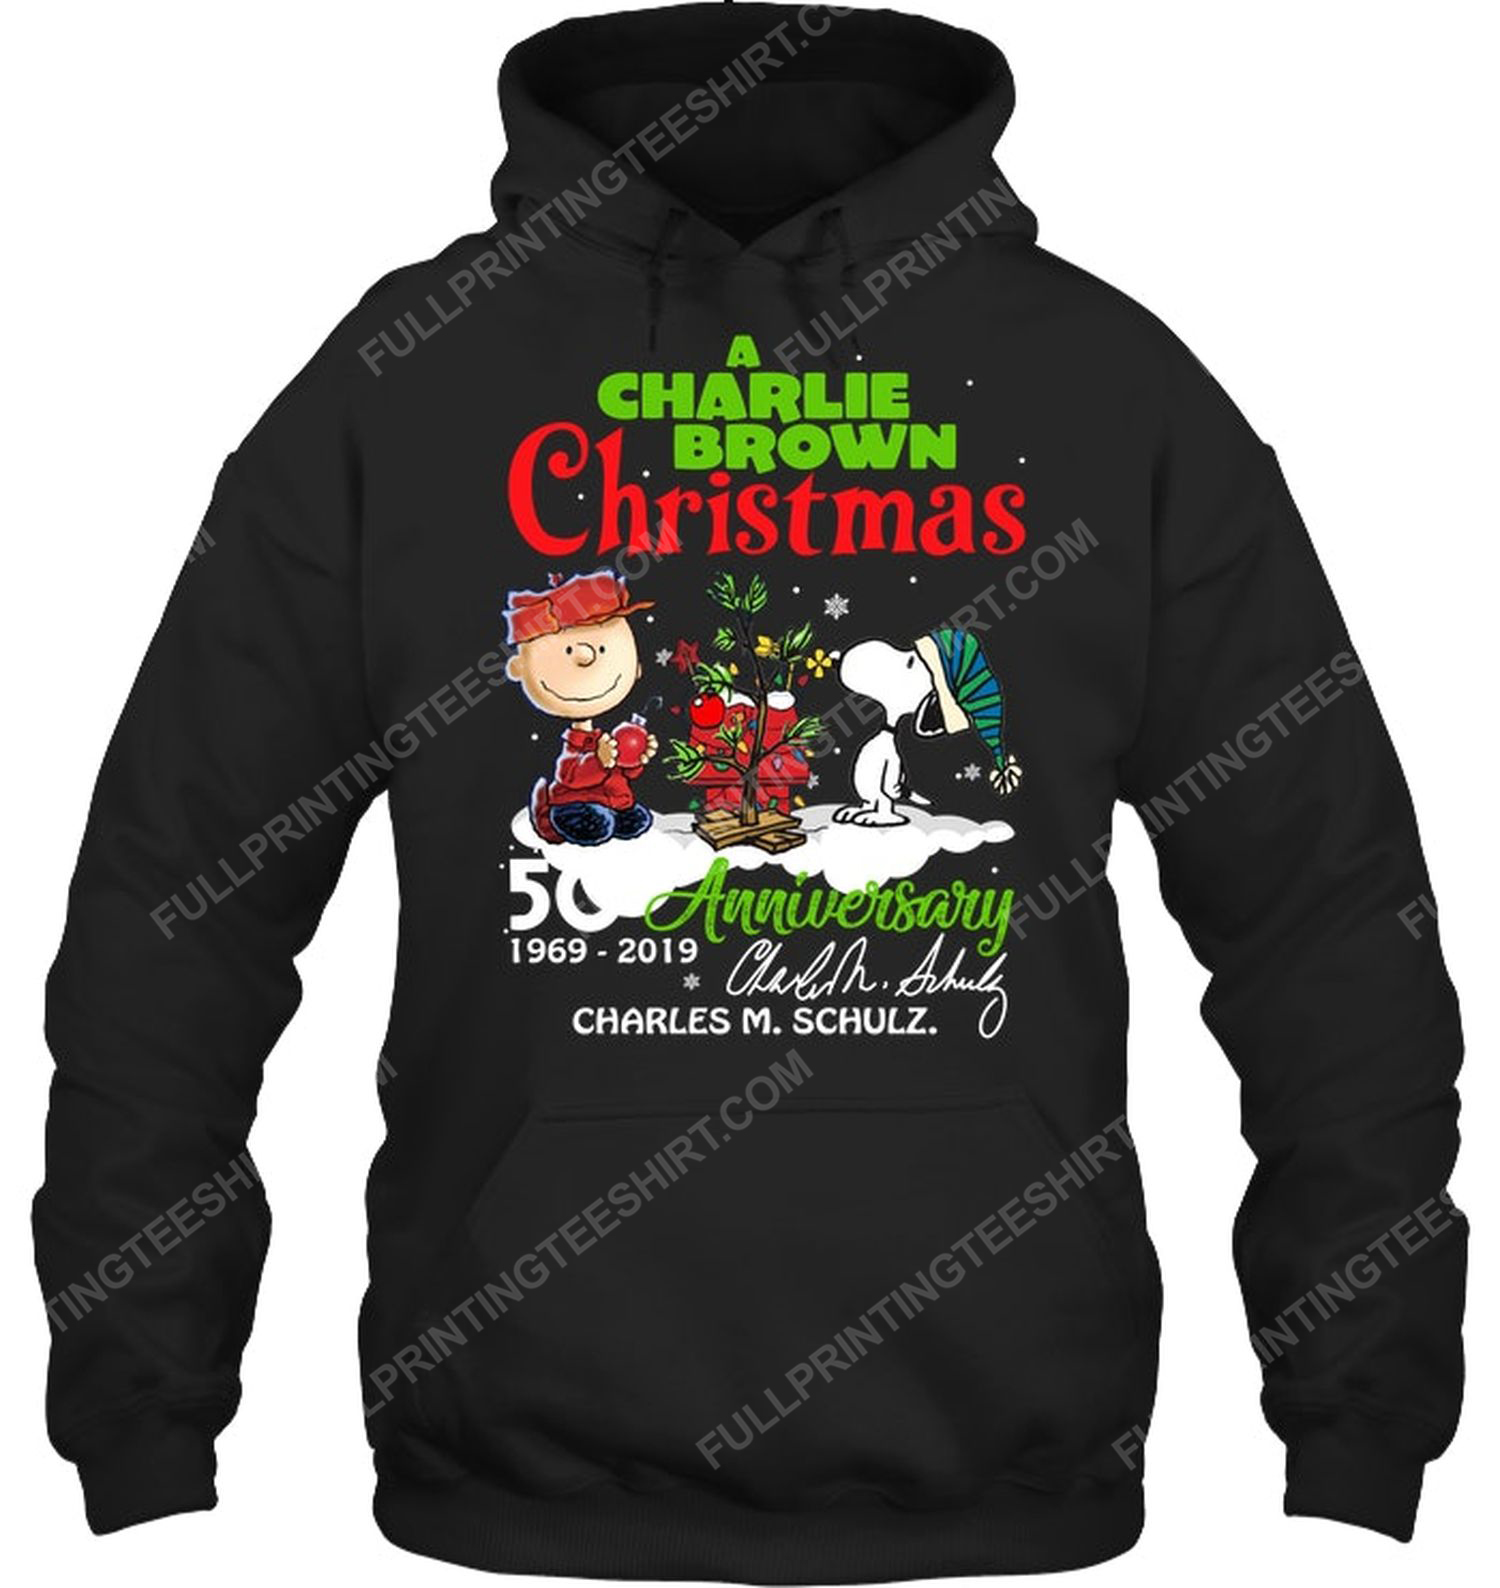 50th anniversary a charlie brown christmas hoodie